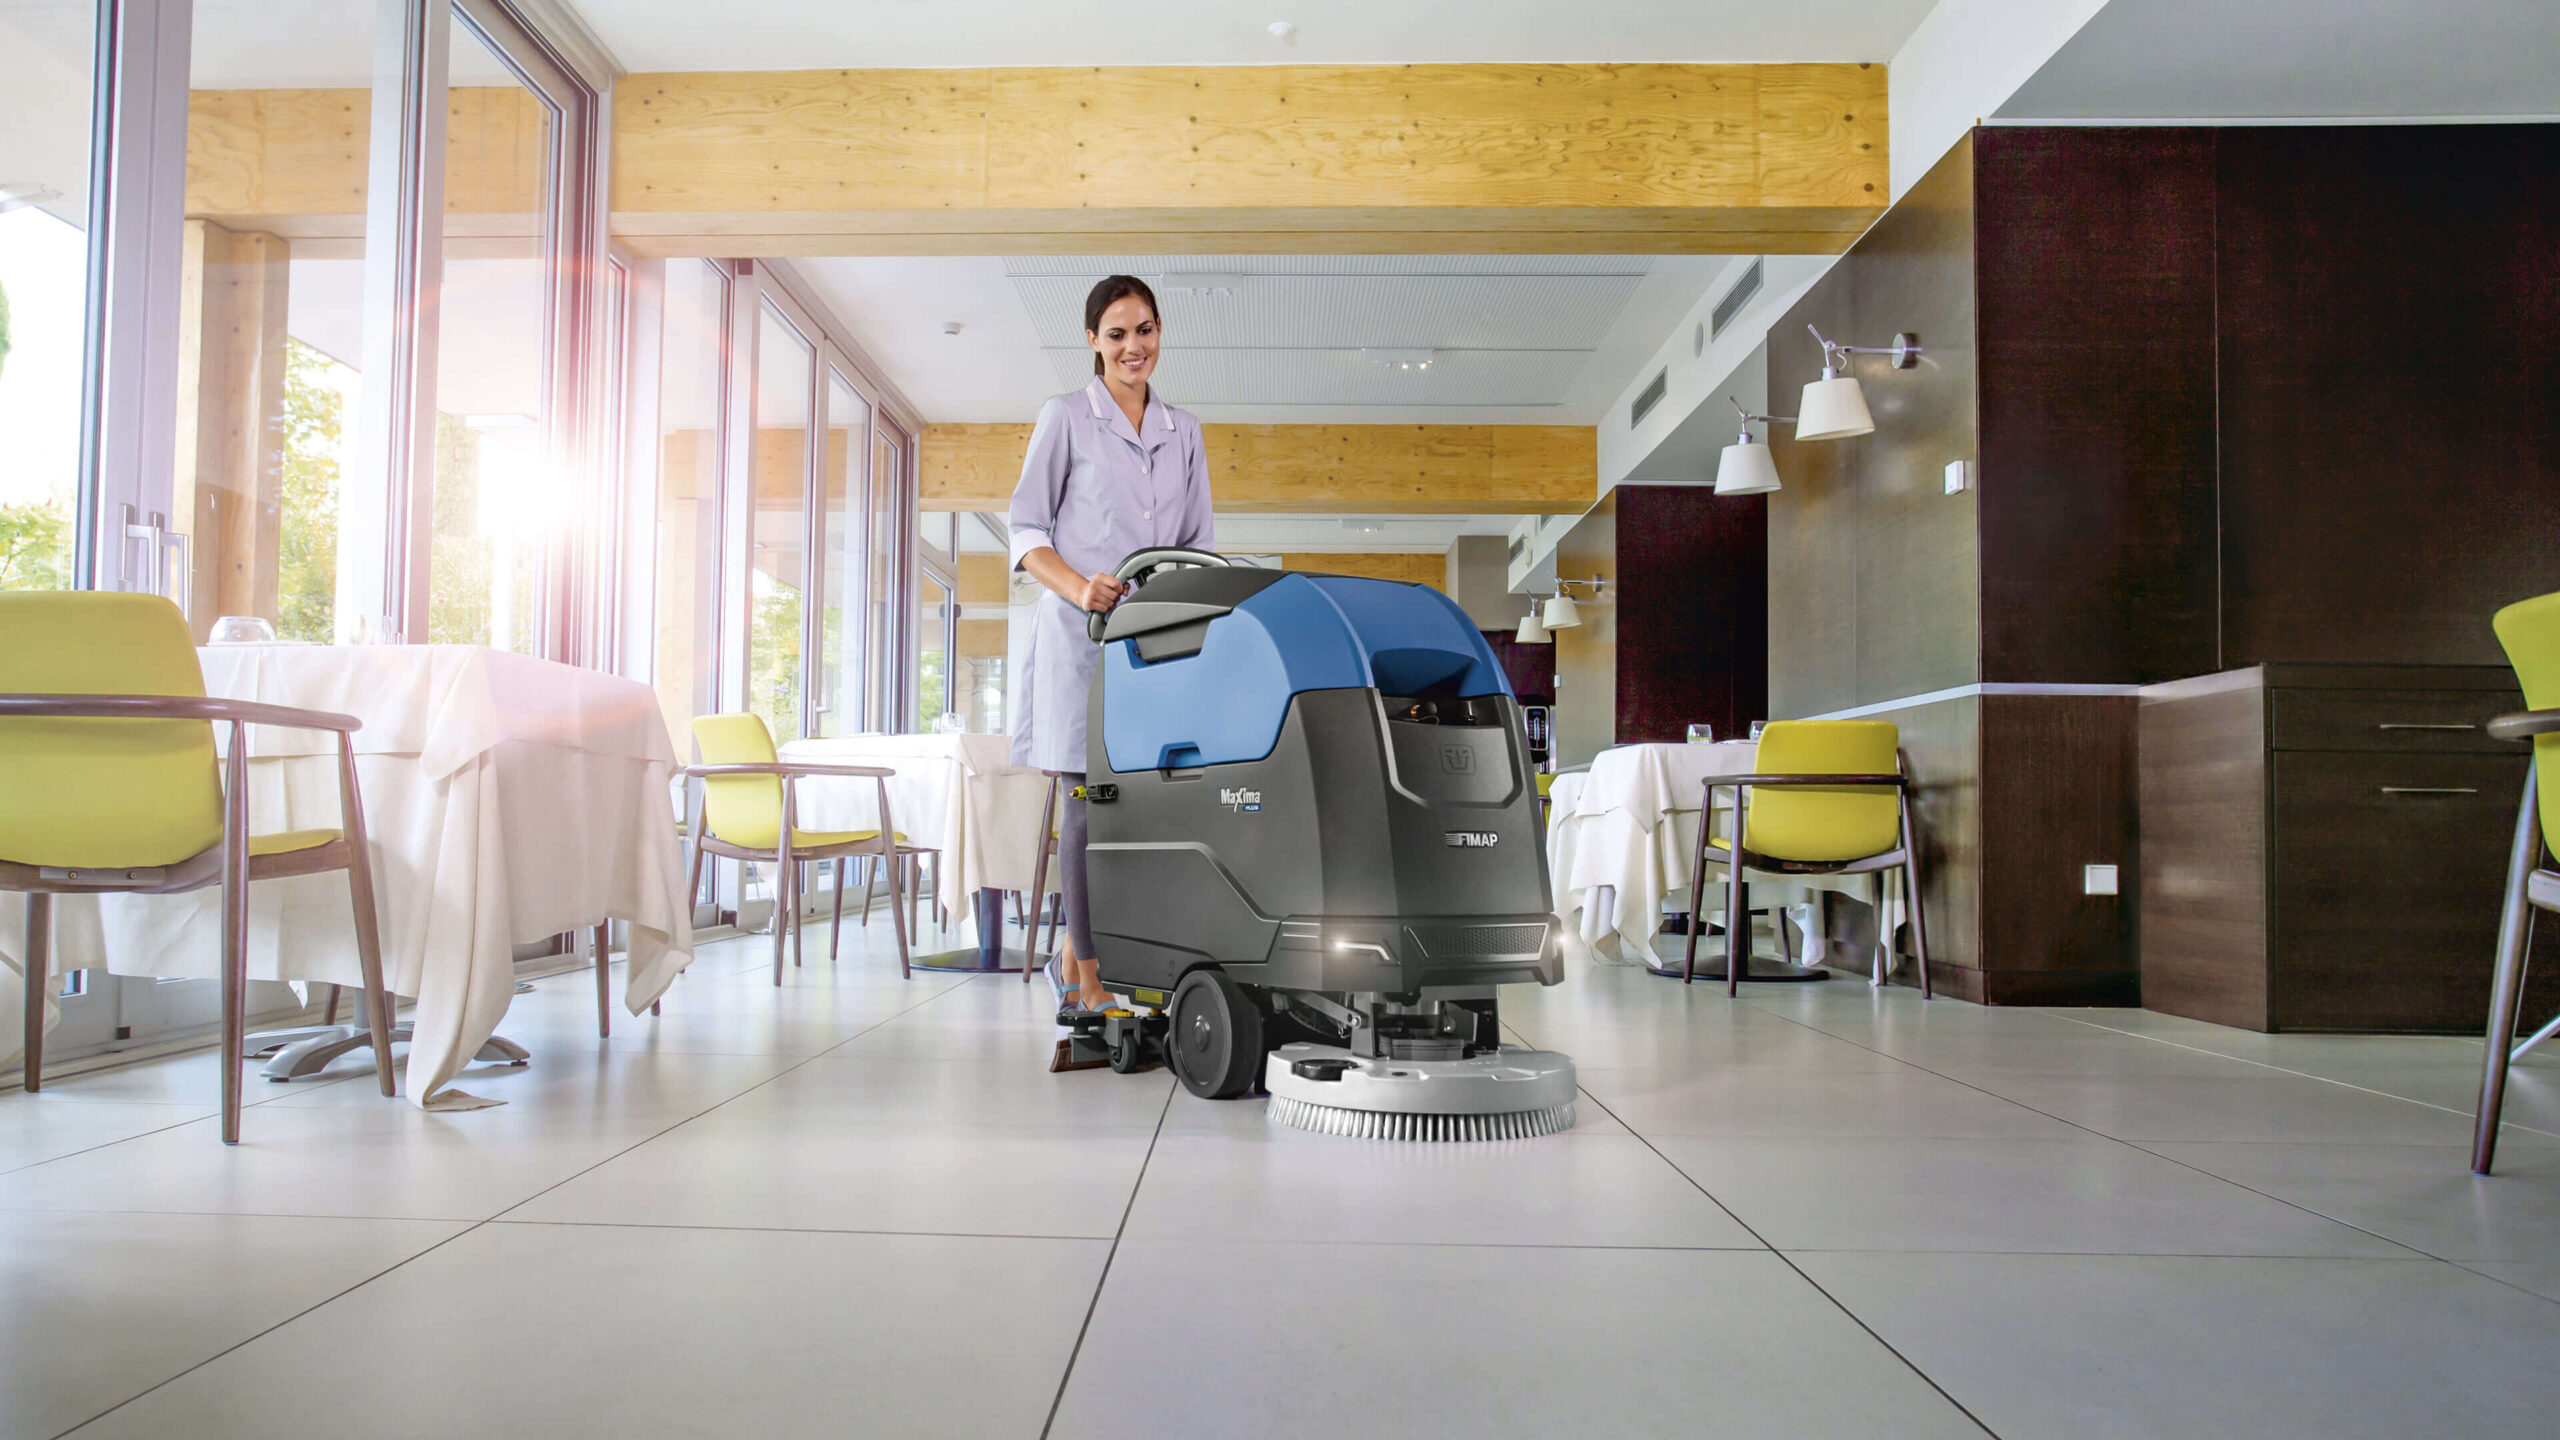 Woman Using Maxima 50 Floor Cleaning Machine In Restaurant